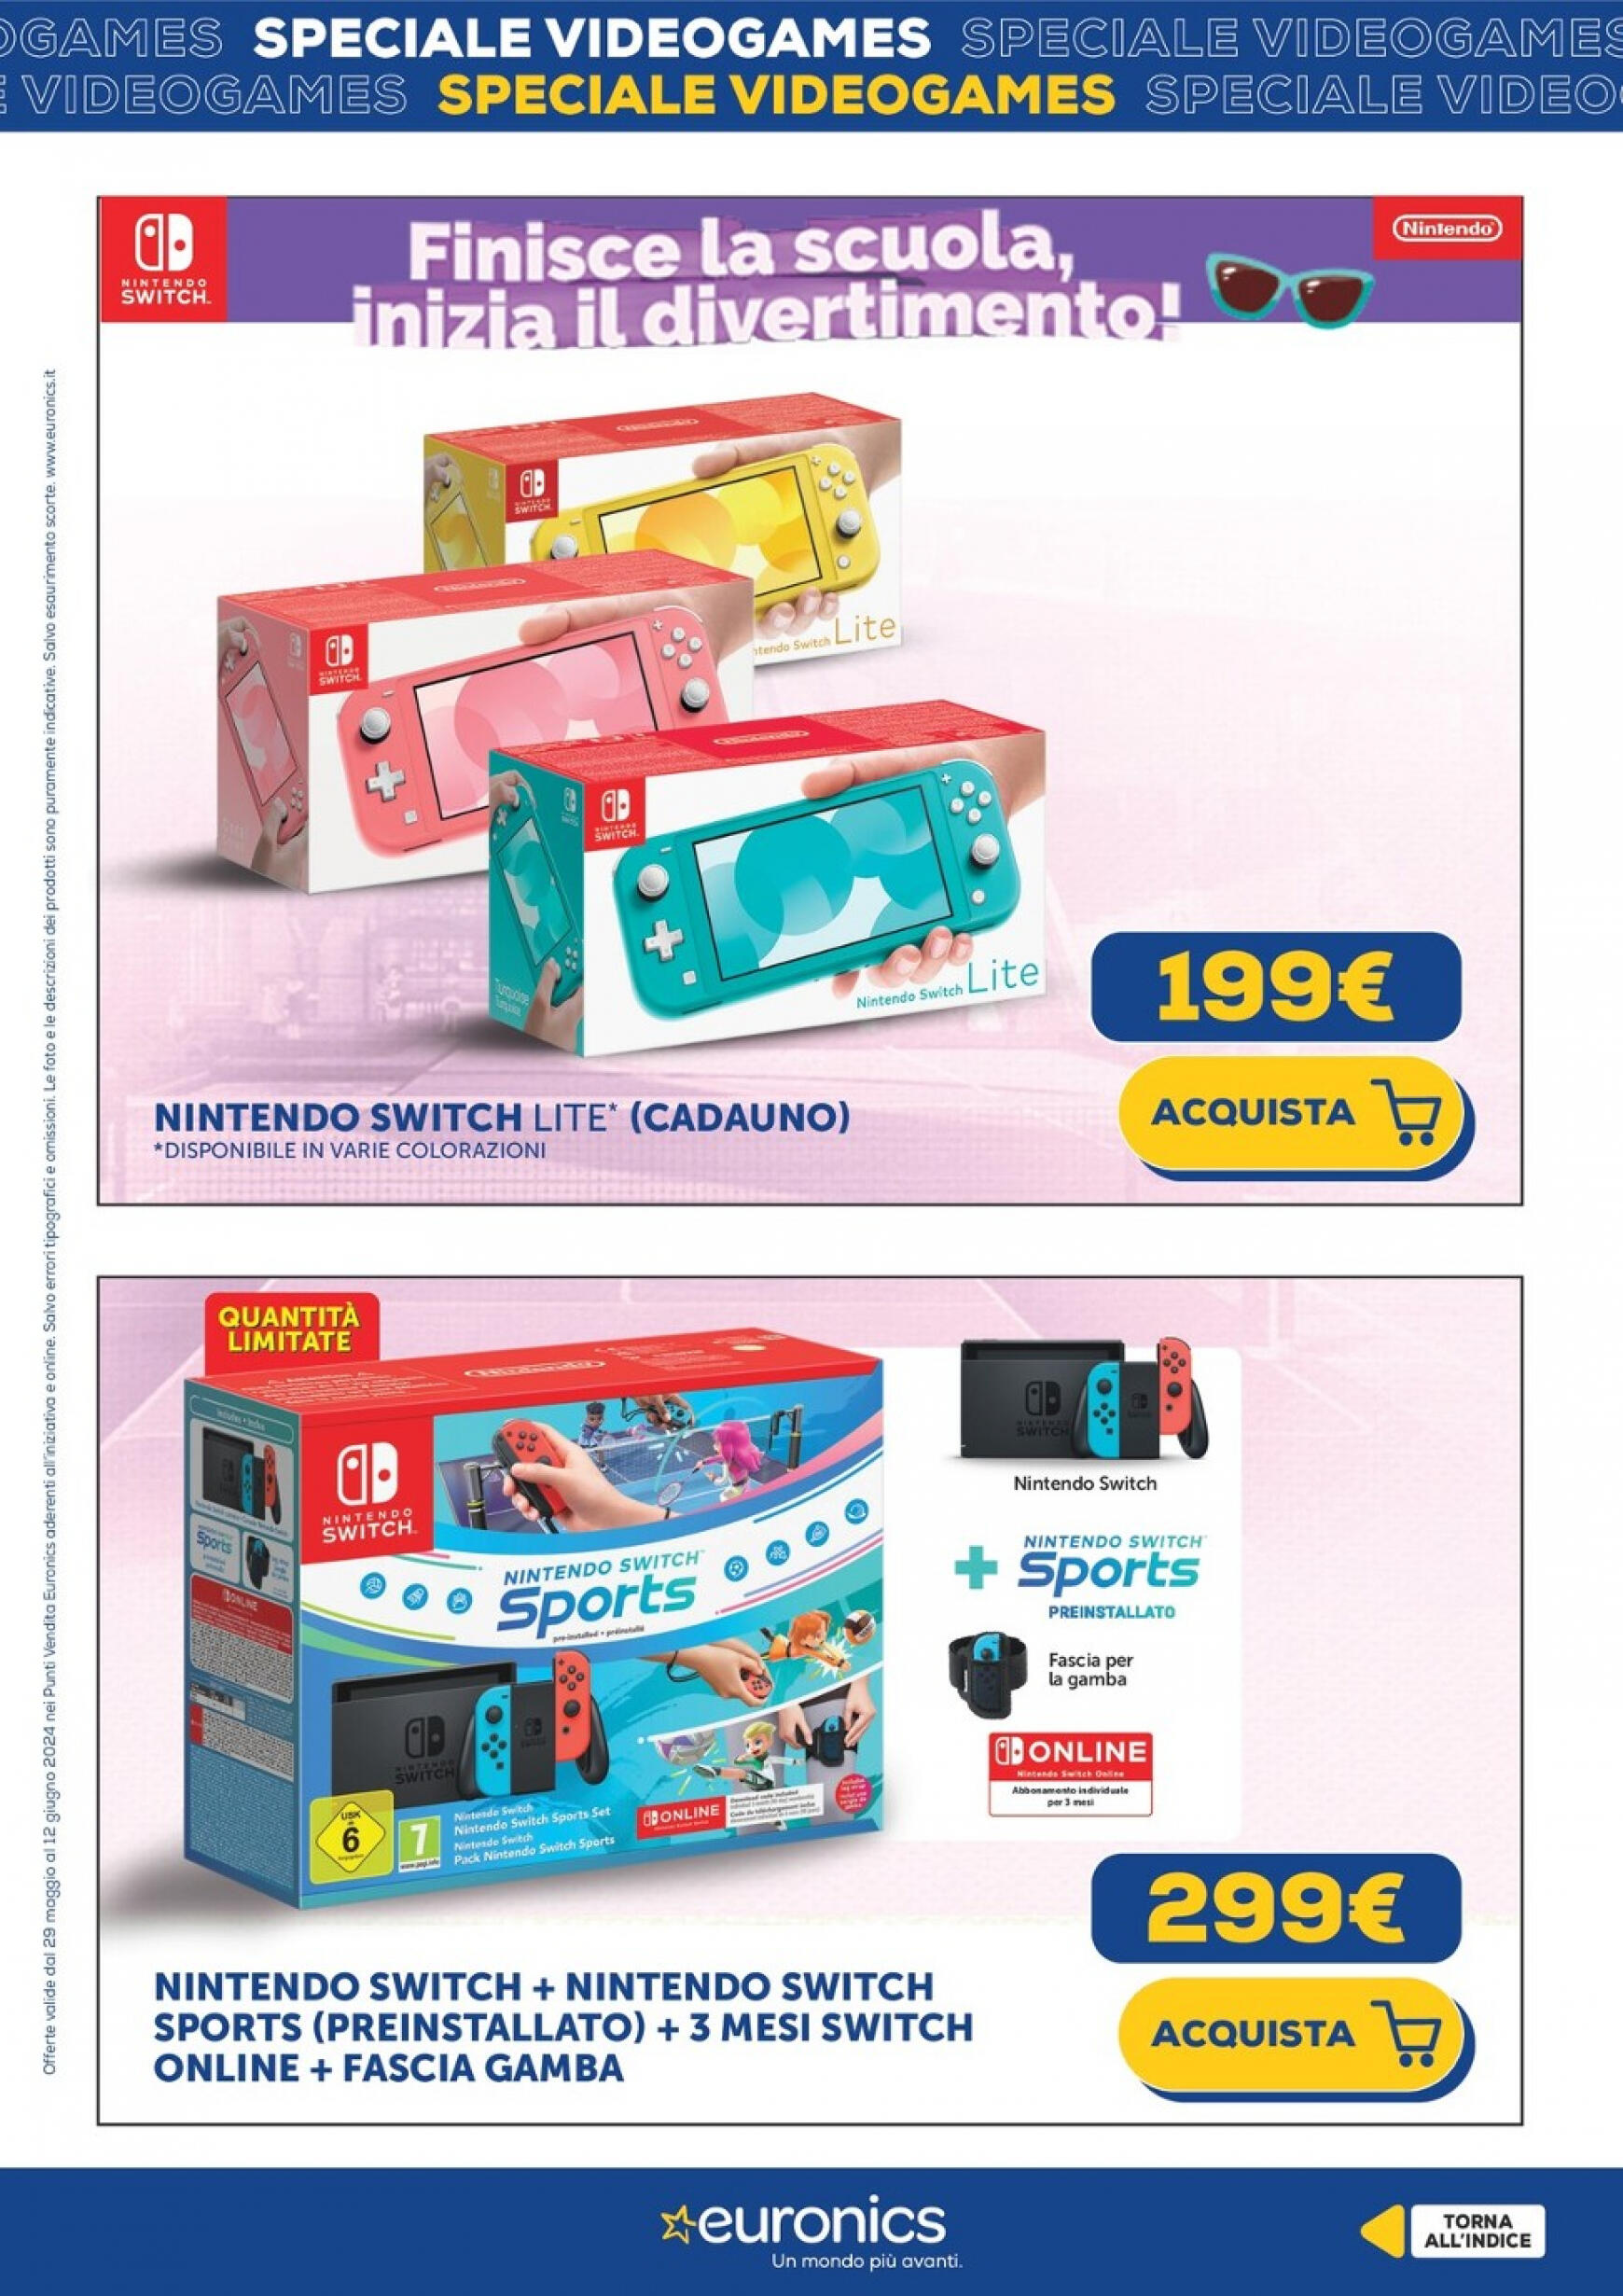 euronics - Nuovo volantino Euronics - Speciale Videogames 29.05. - 12.06. - page: 8